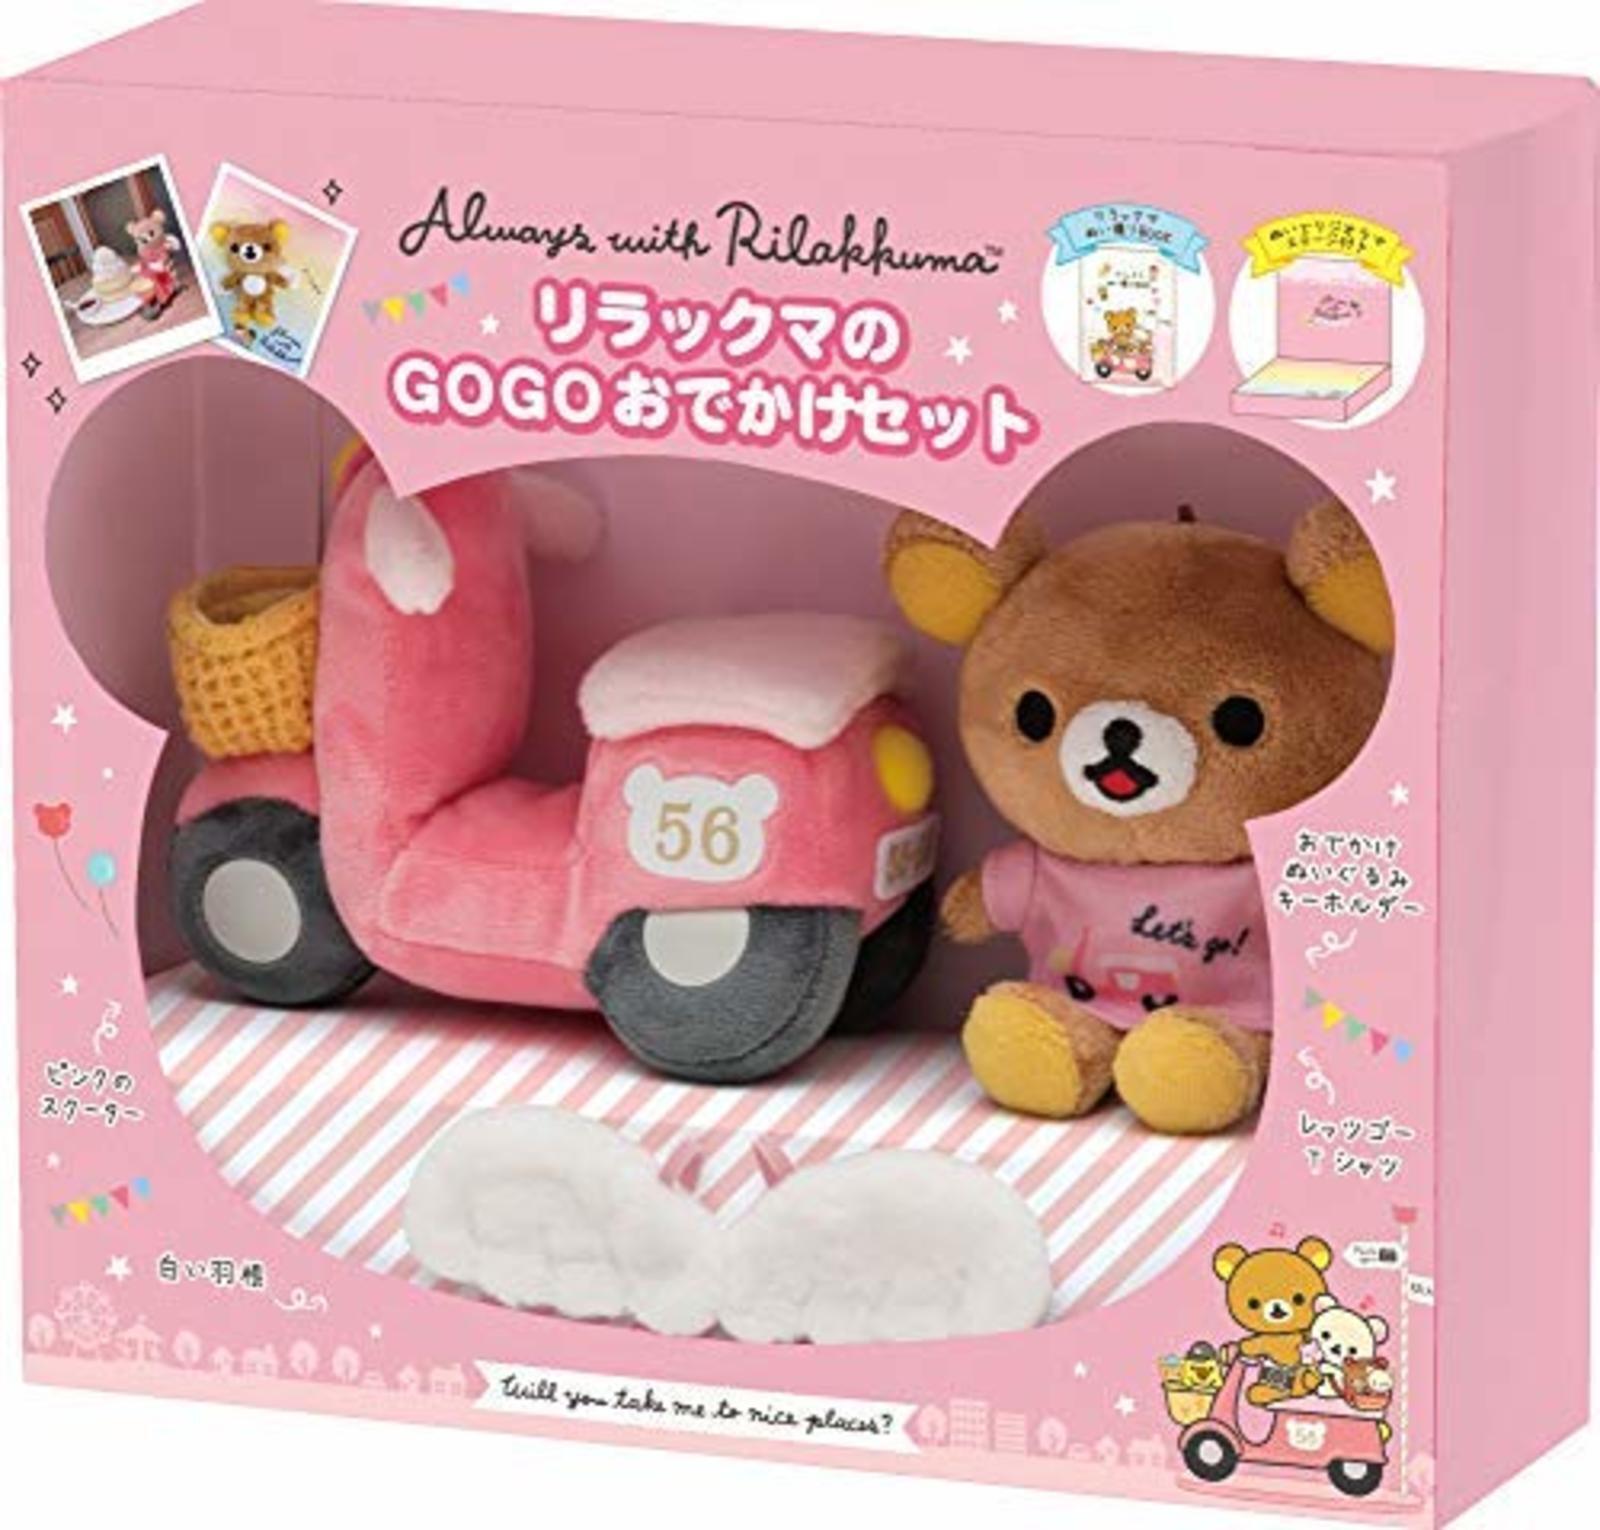 Rilakkuma Boxed Plush Doll Set GOGO Pink Scooter San-X MY25601 F/S w/Tracking#